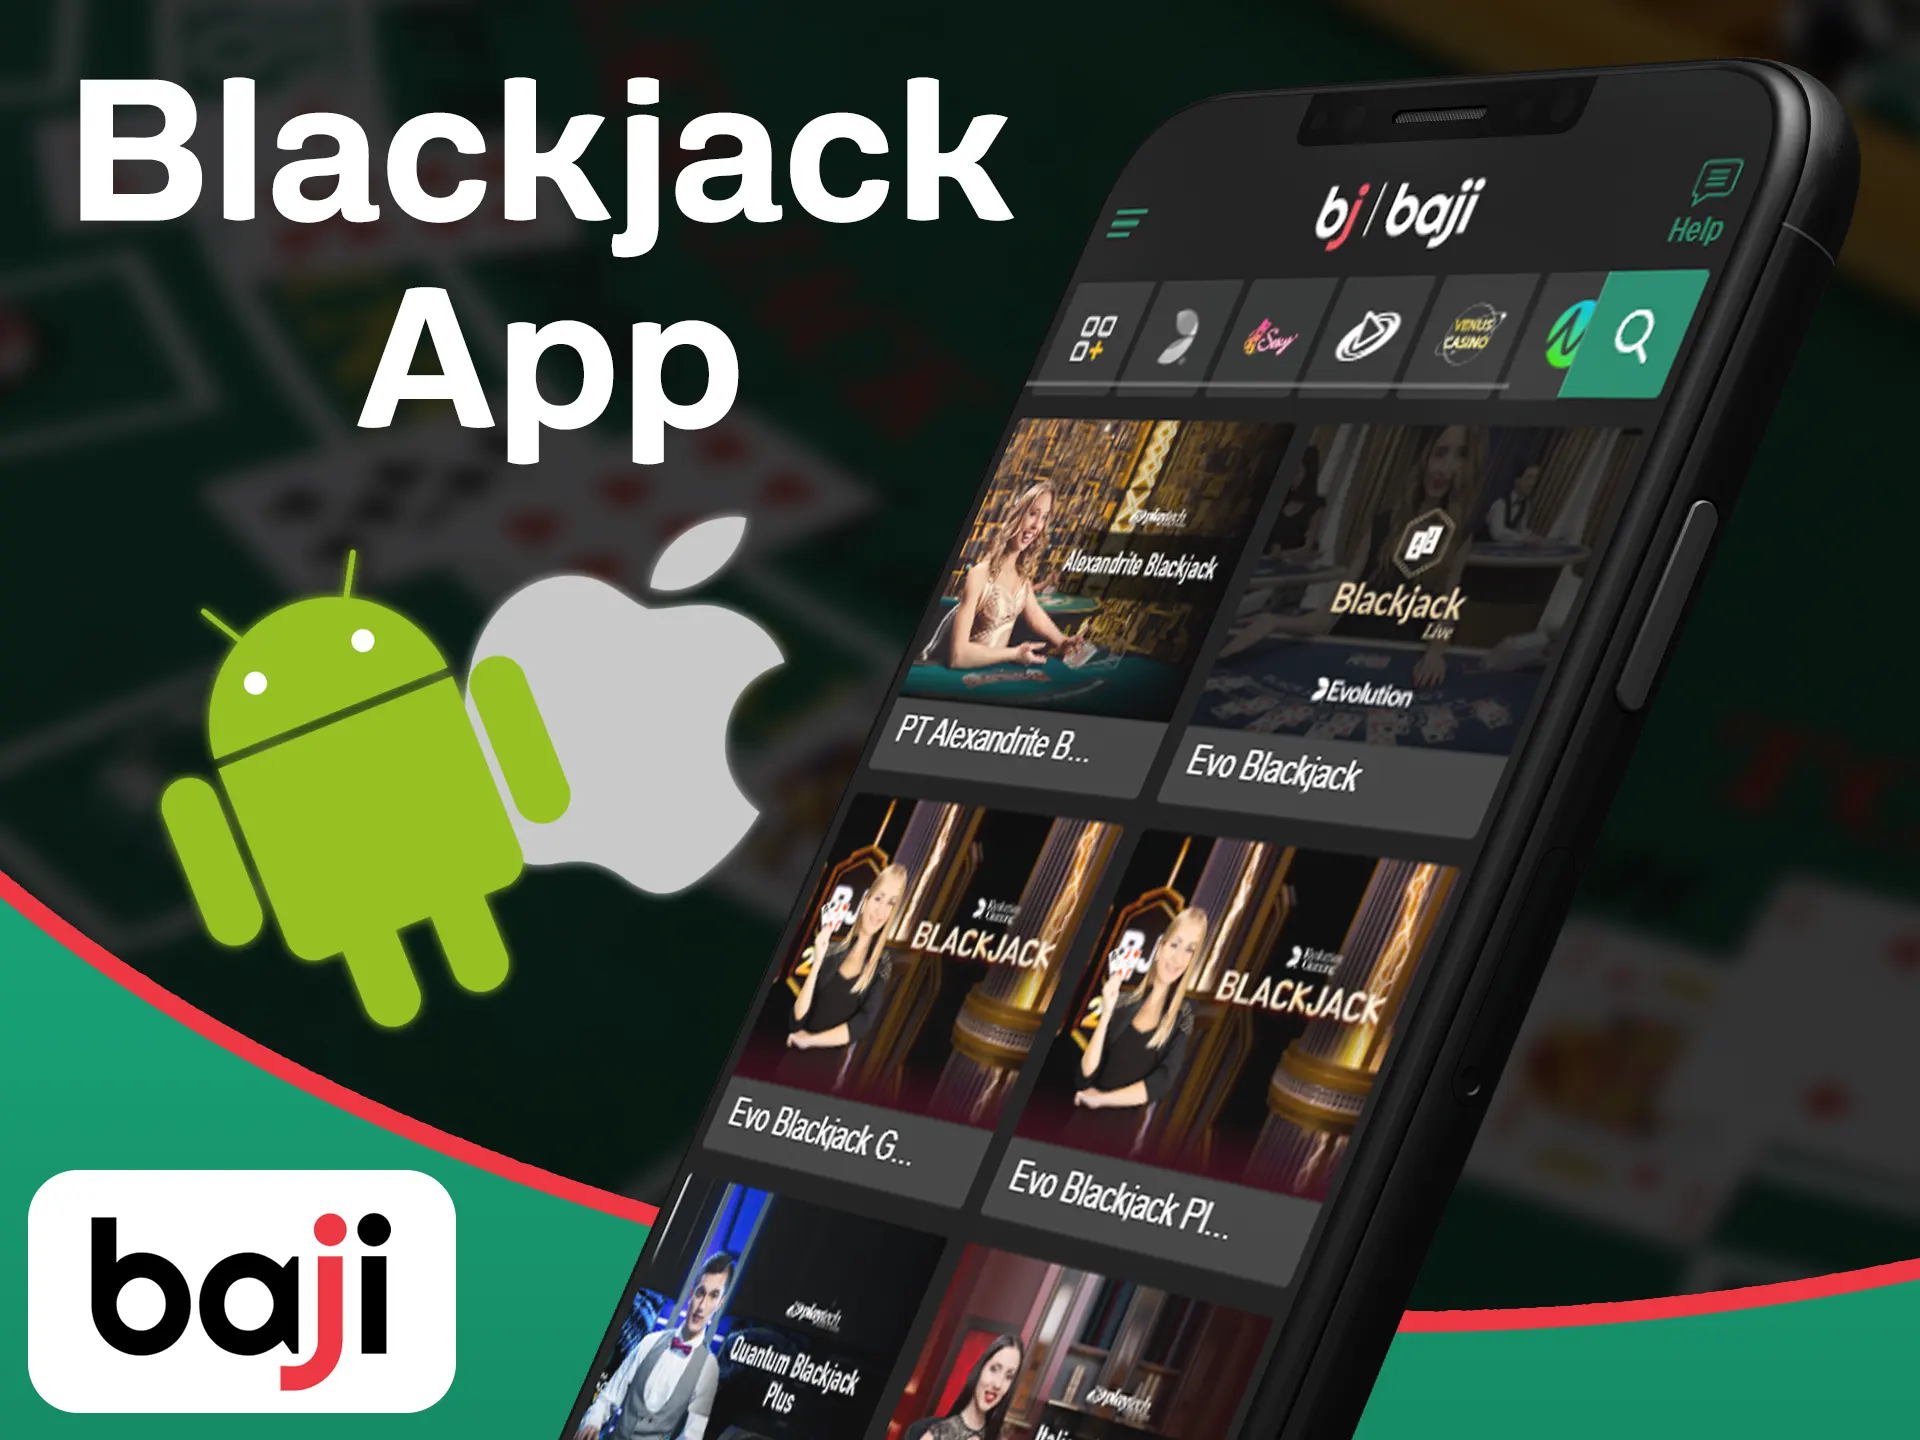 Play the blackjack app using the Baji app.